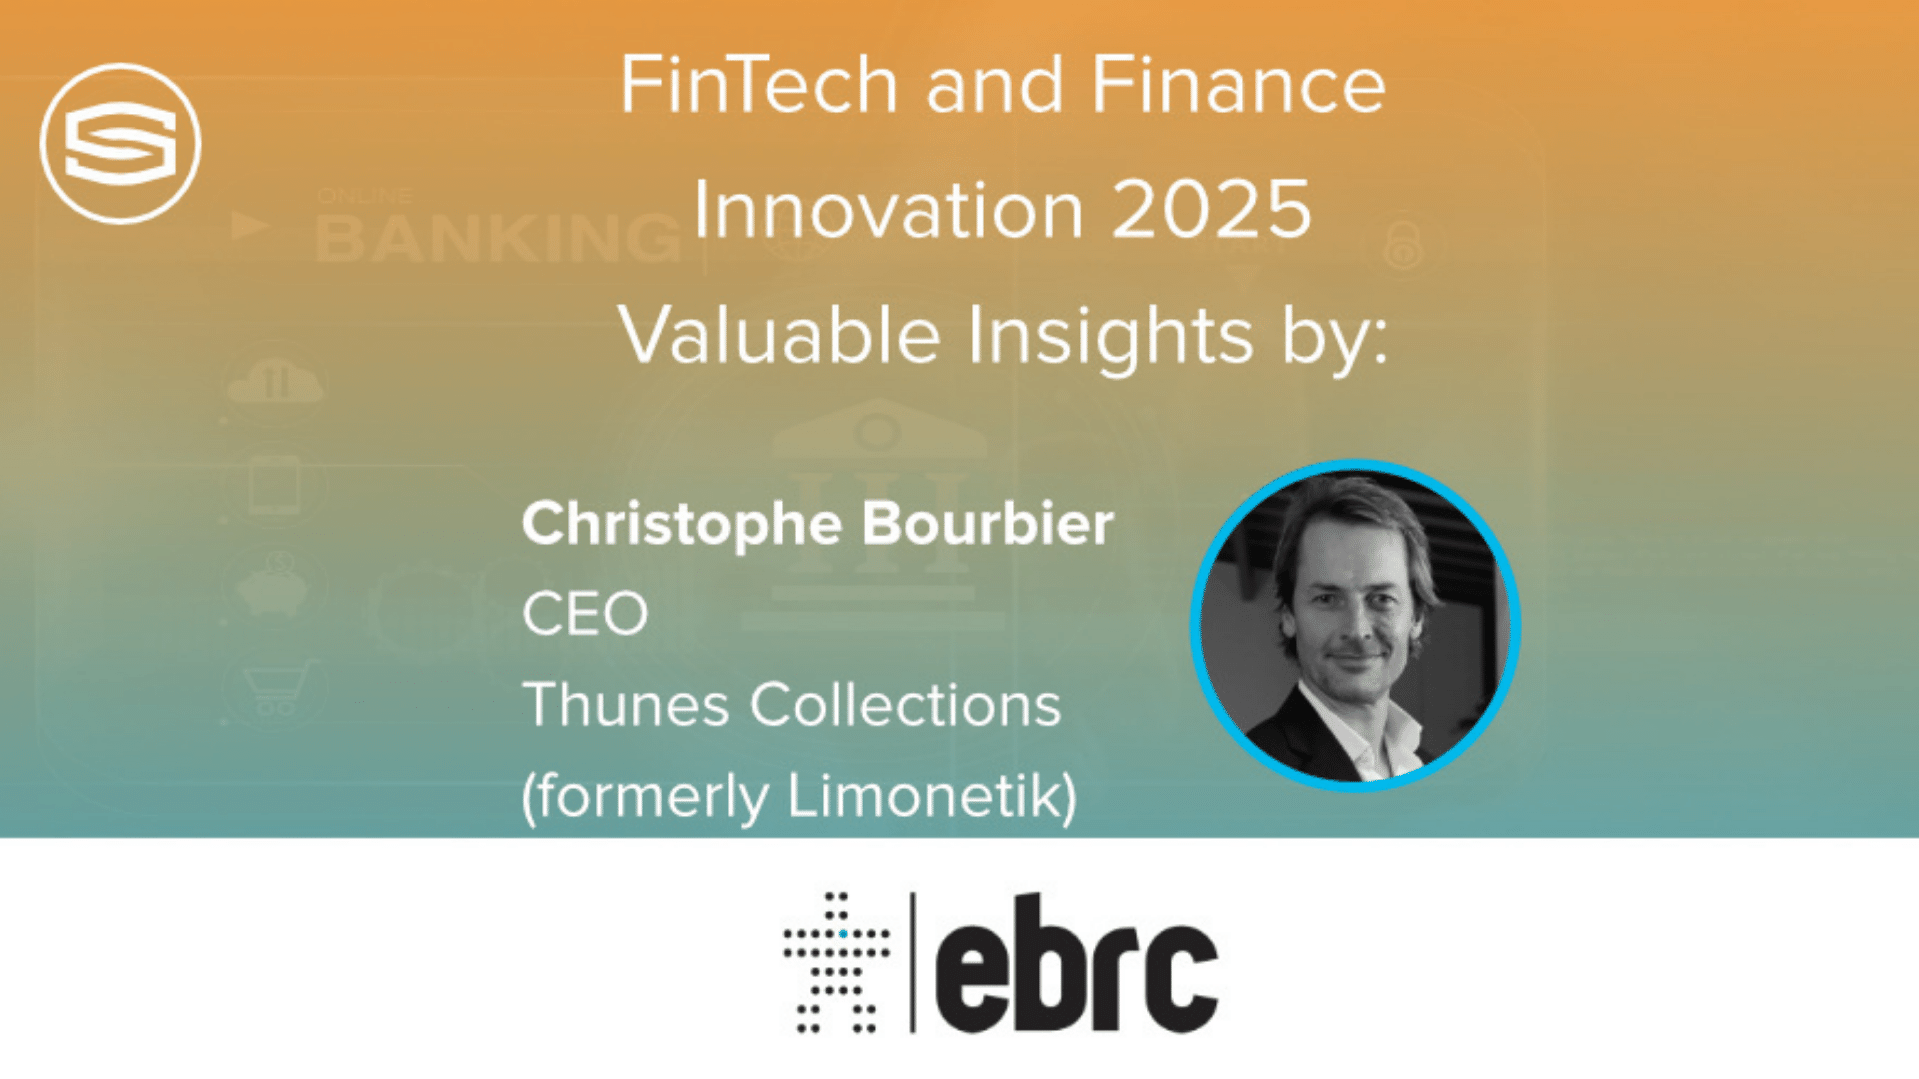 FinTech and Finance Innovation 2025 Insights by Christophe Bourbier